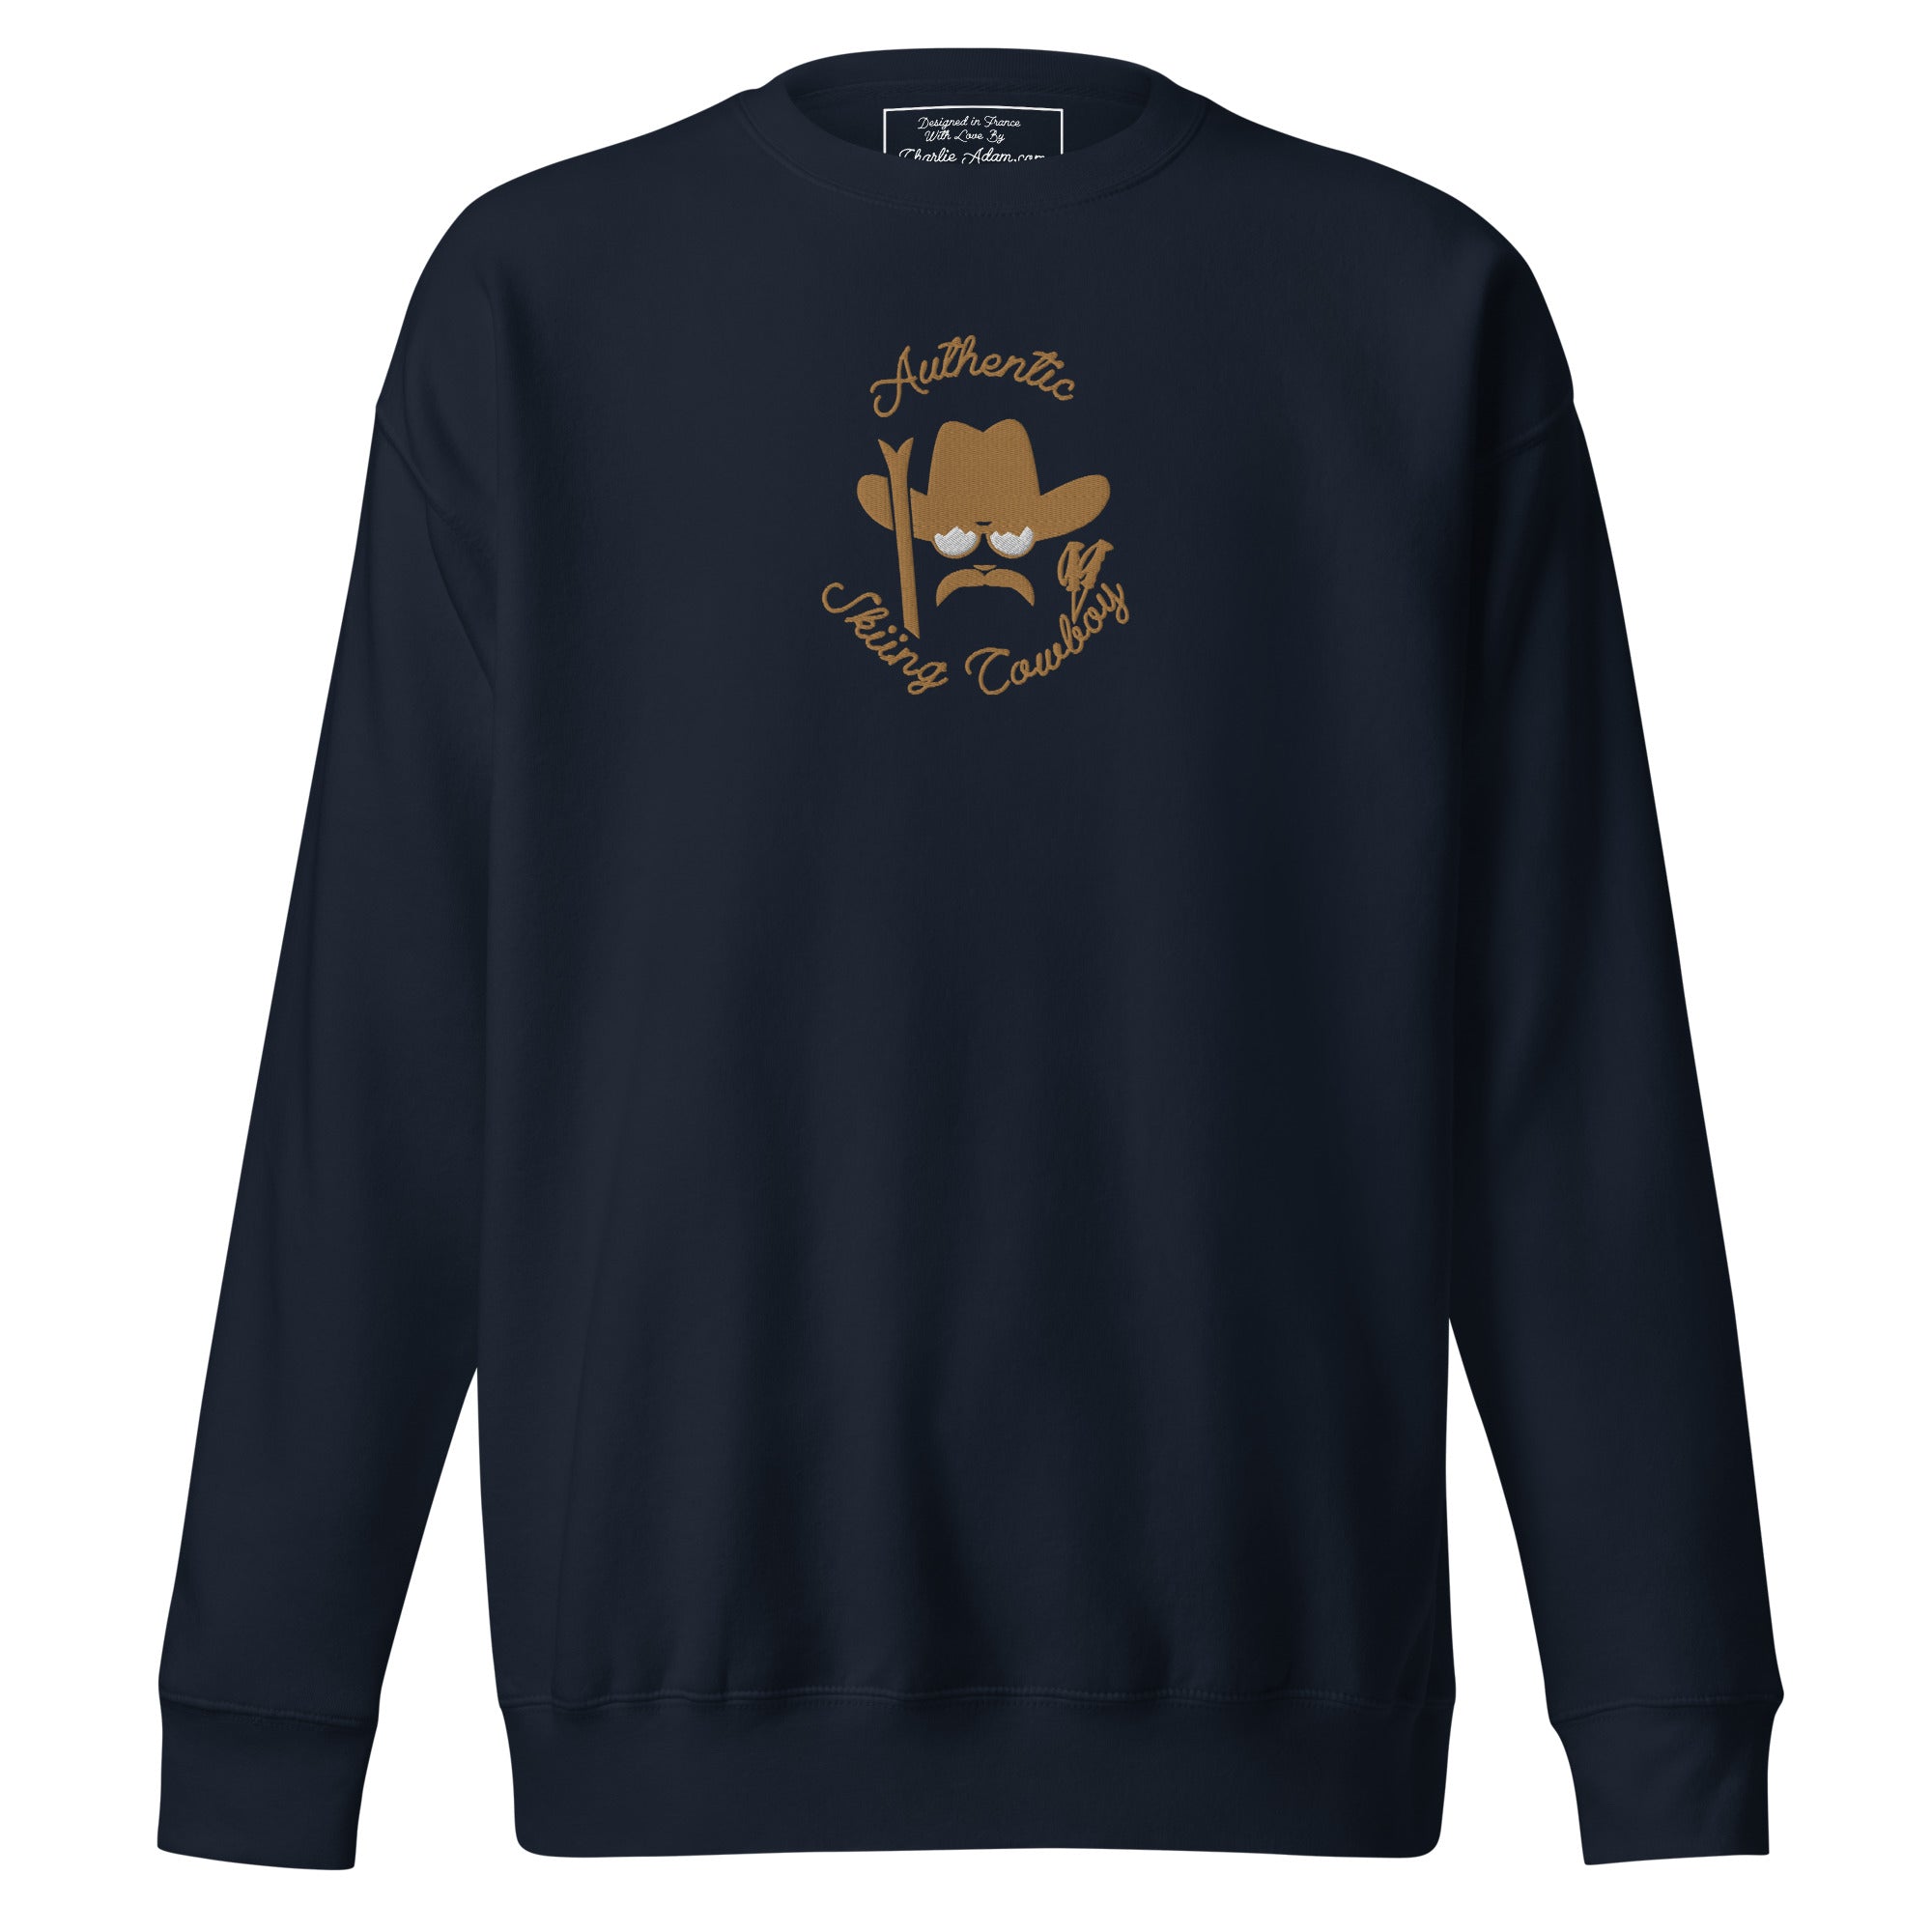 Sweatshirt premium unisexe Authentic Skiing Cowboy grand motif brodé old gold